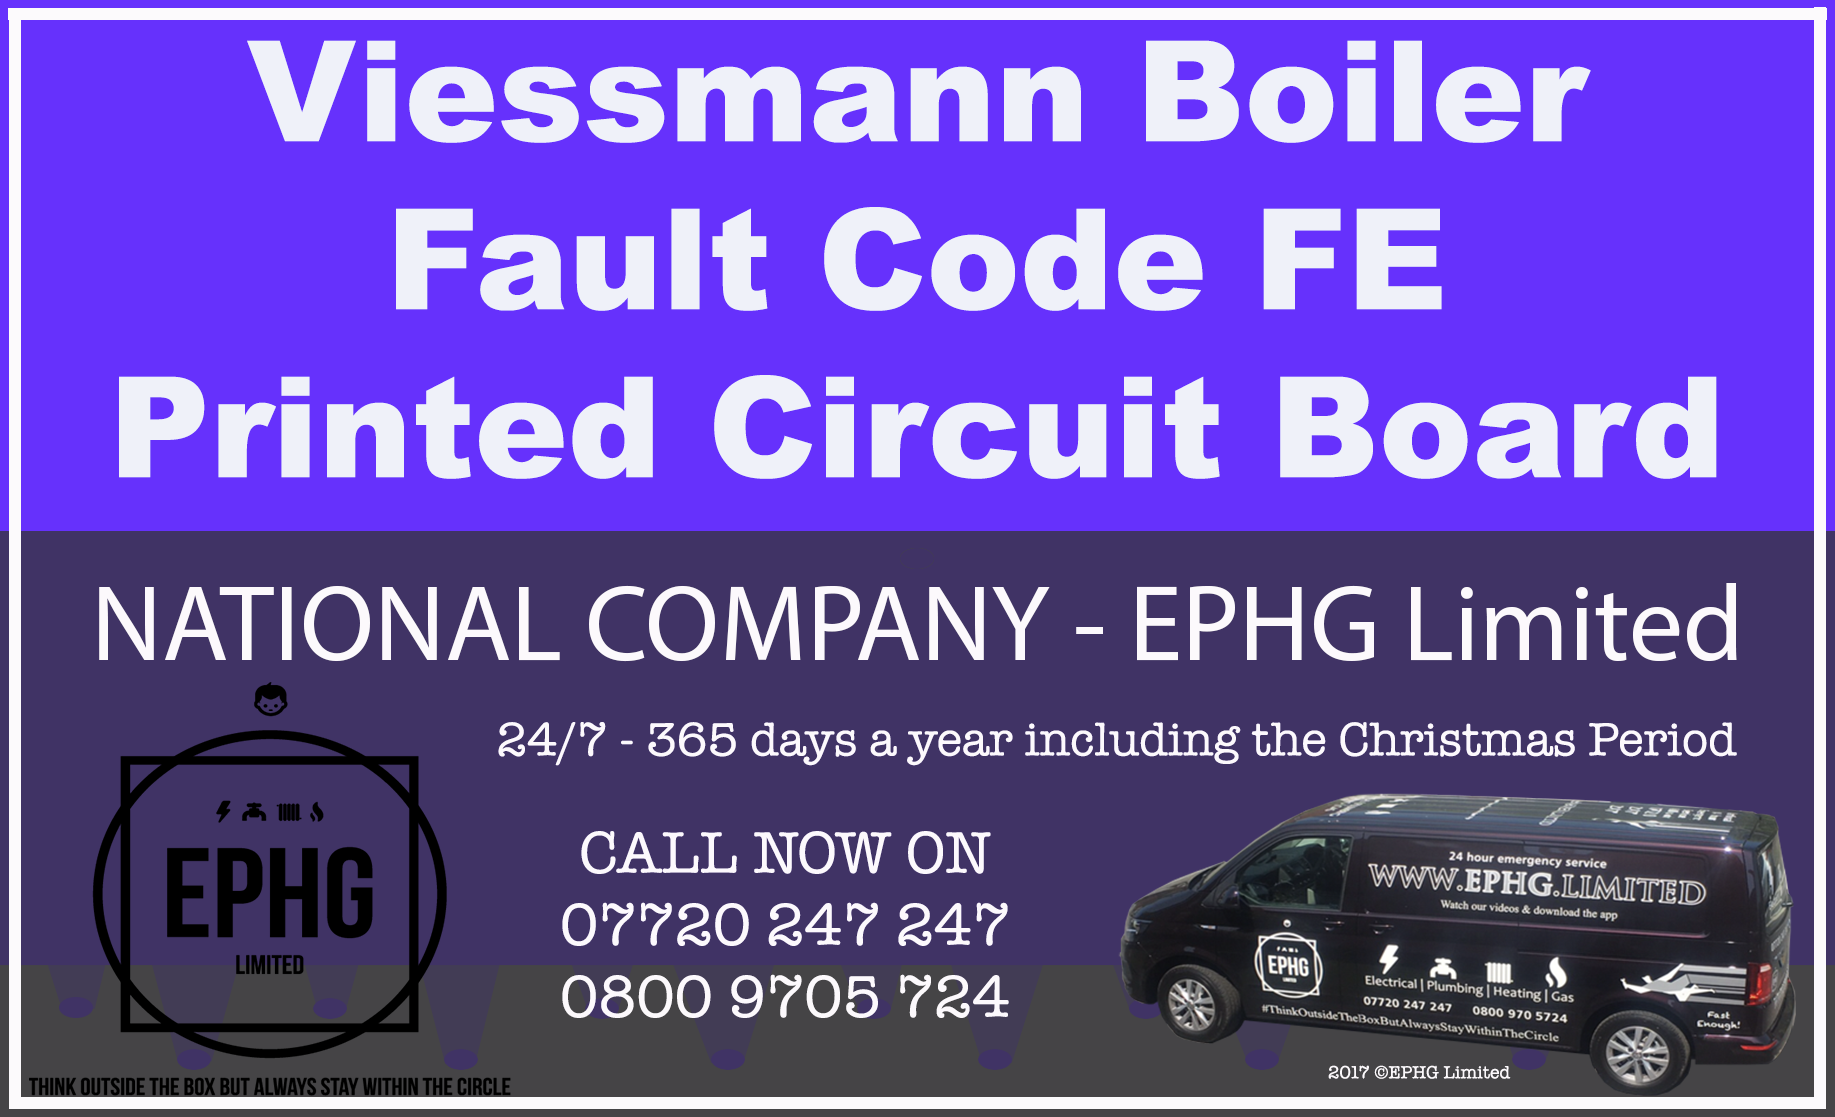 Viessmann boiler error code FE